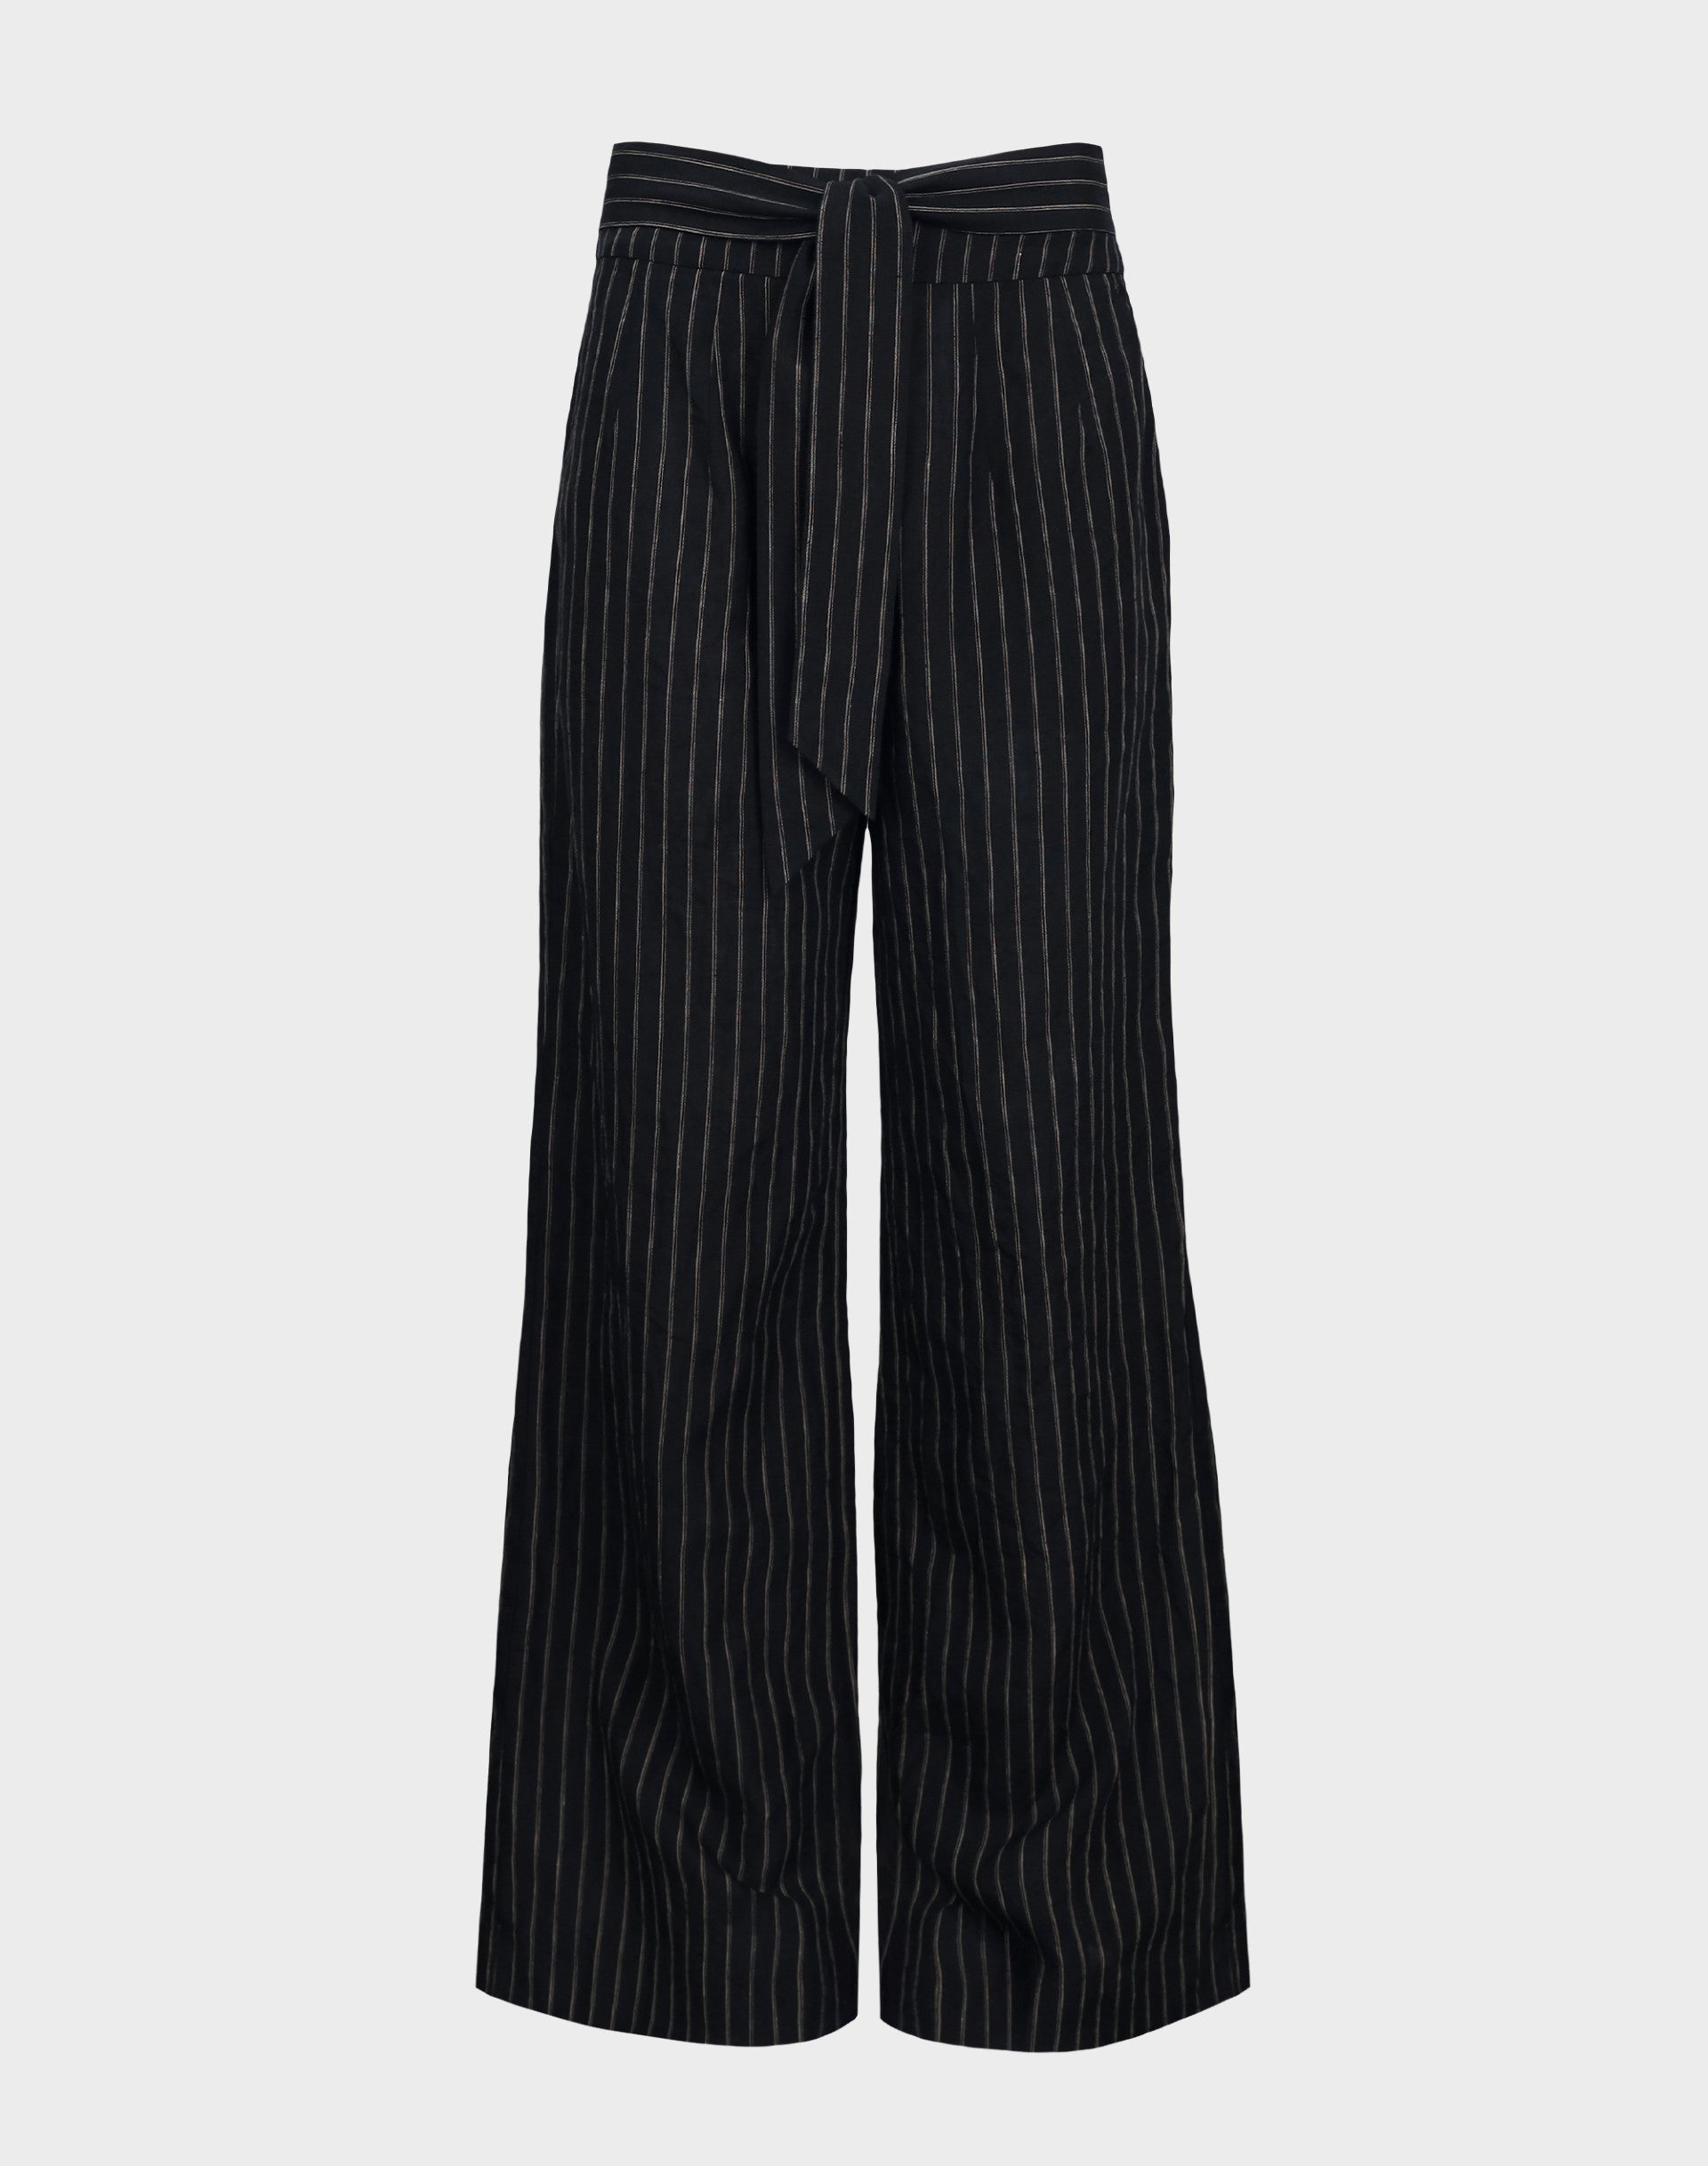 Linen Striped Pant - Black - Pants - Full Length - Women's Clothing - Storm